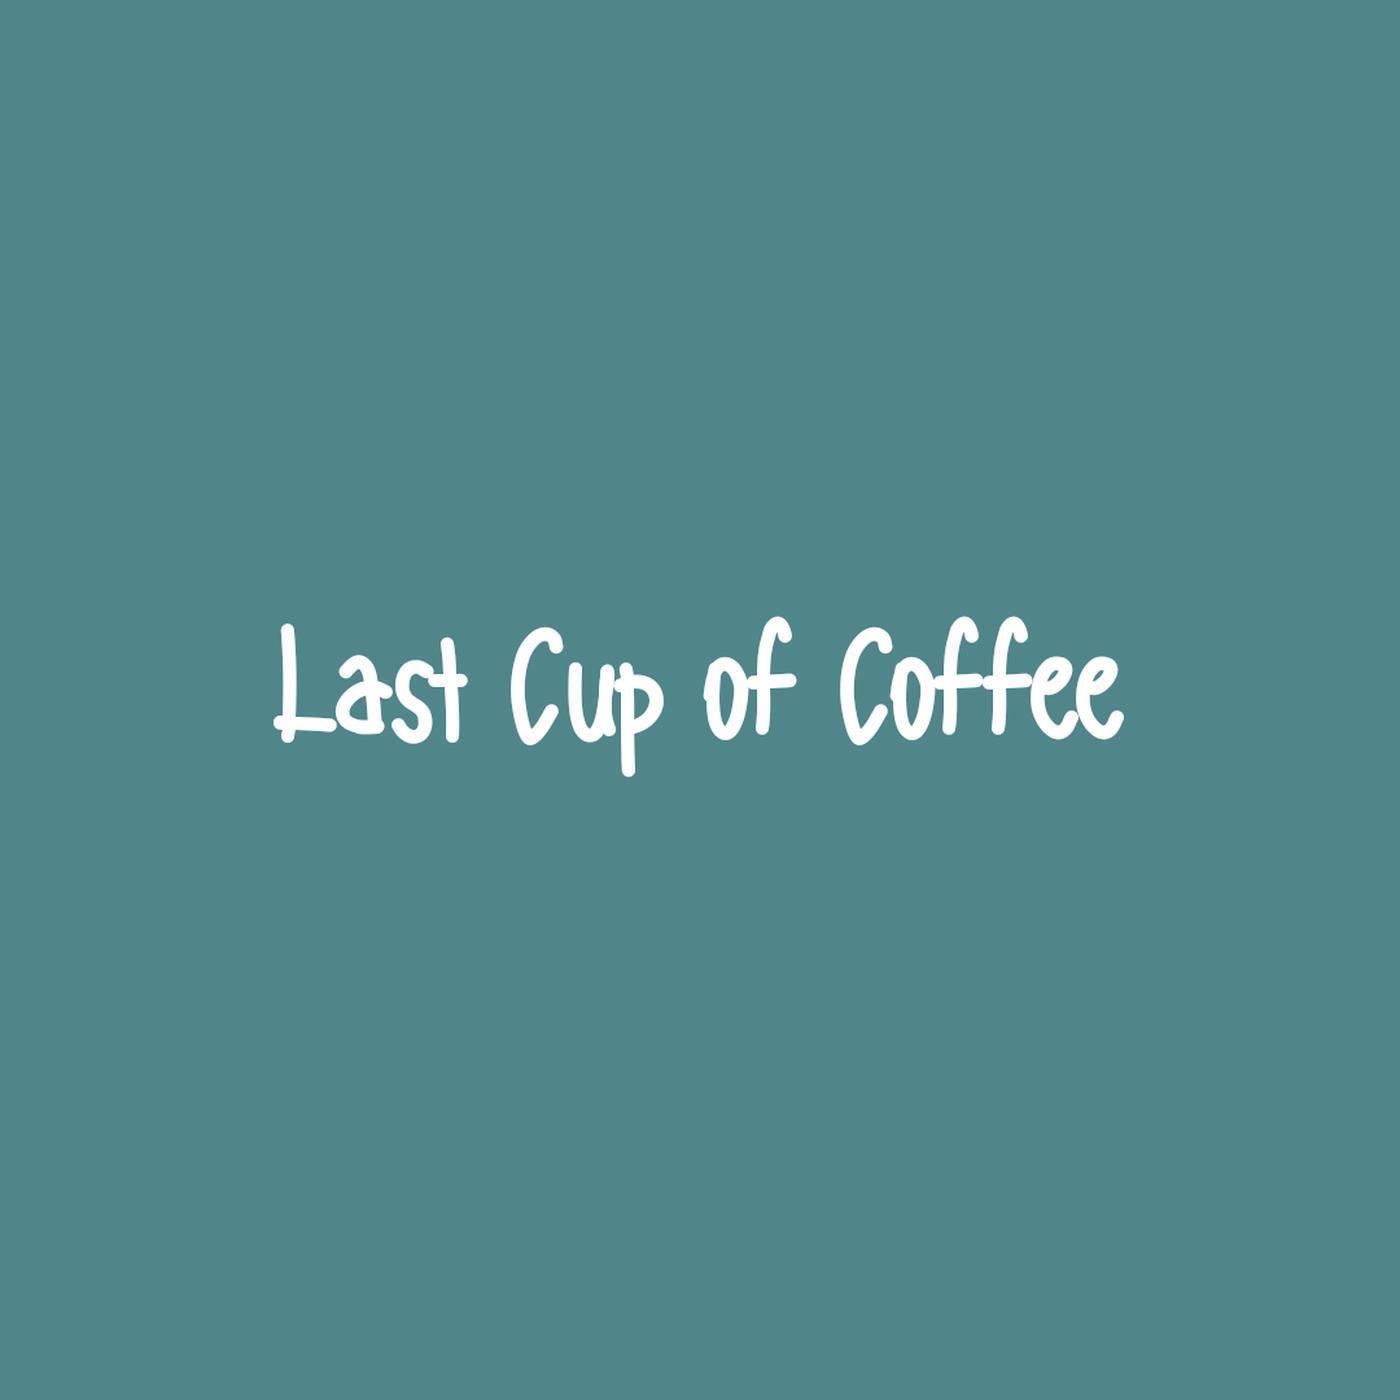 Riduan Richie - Last Cup of Coffee